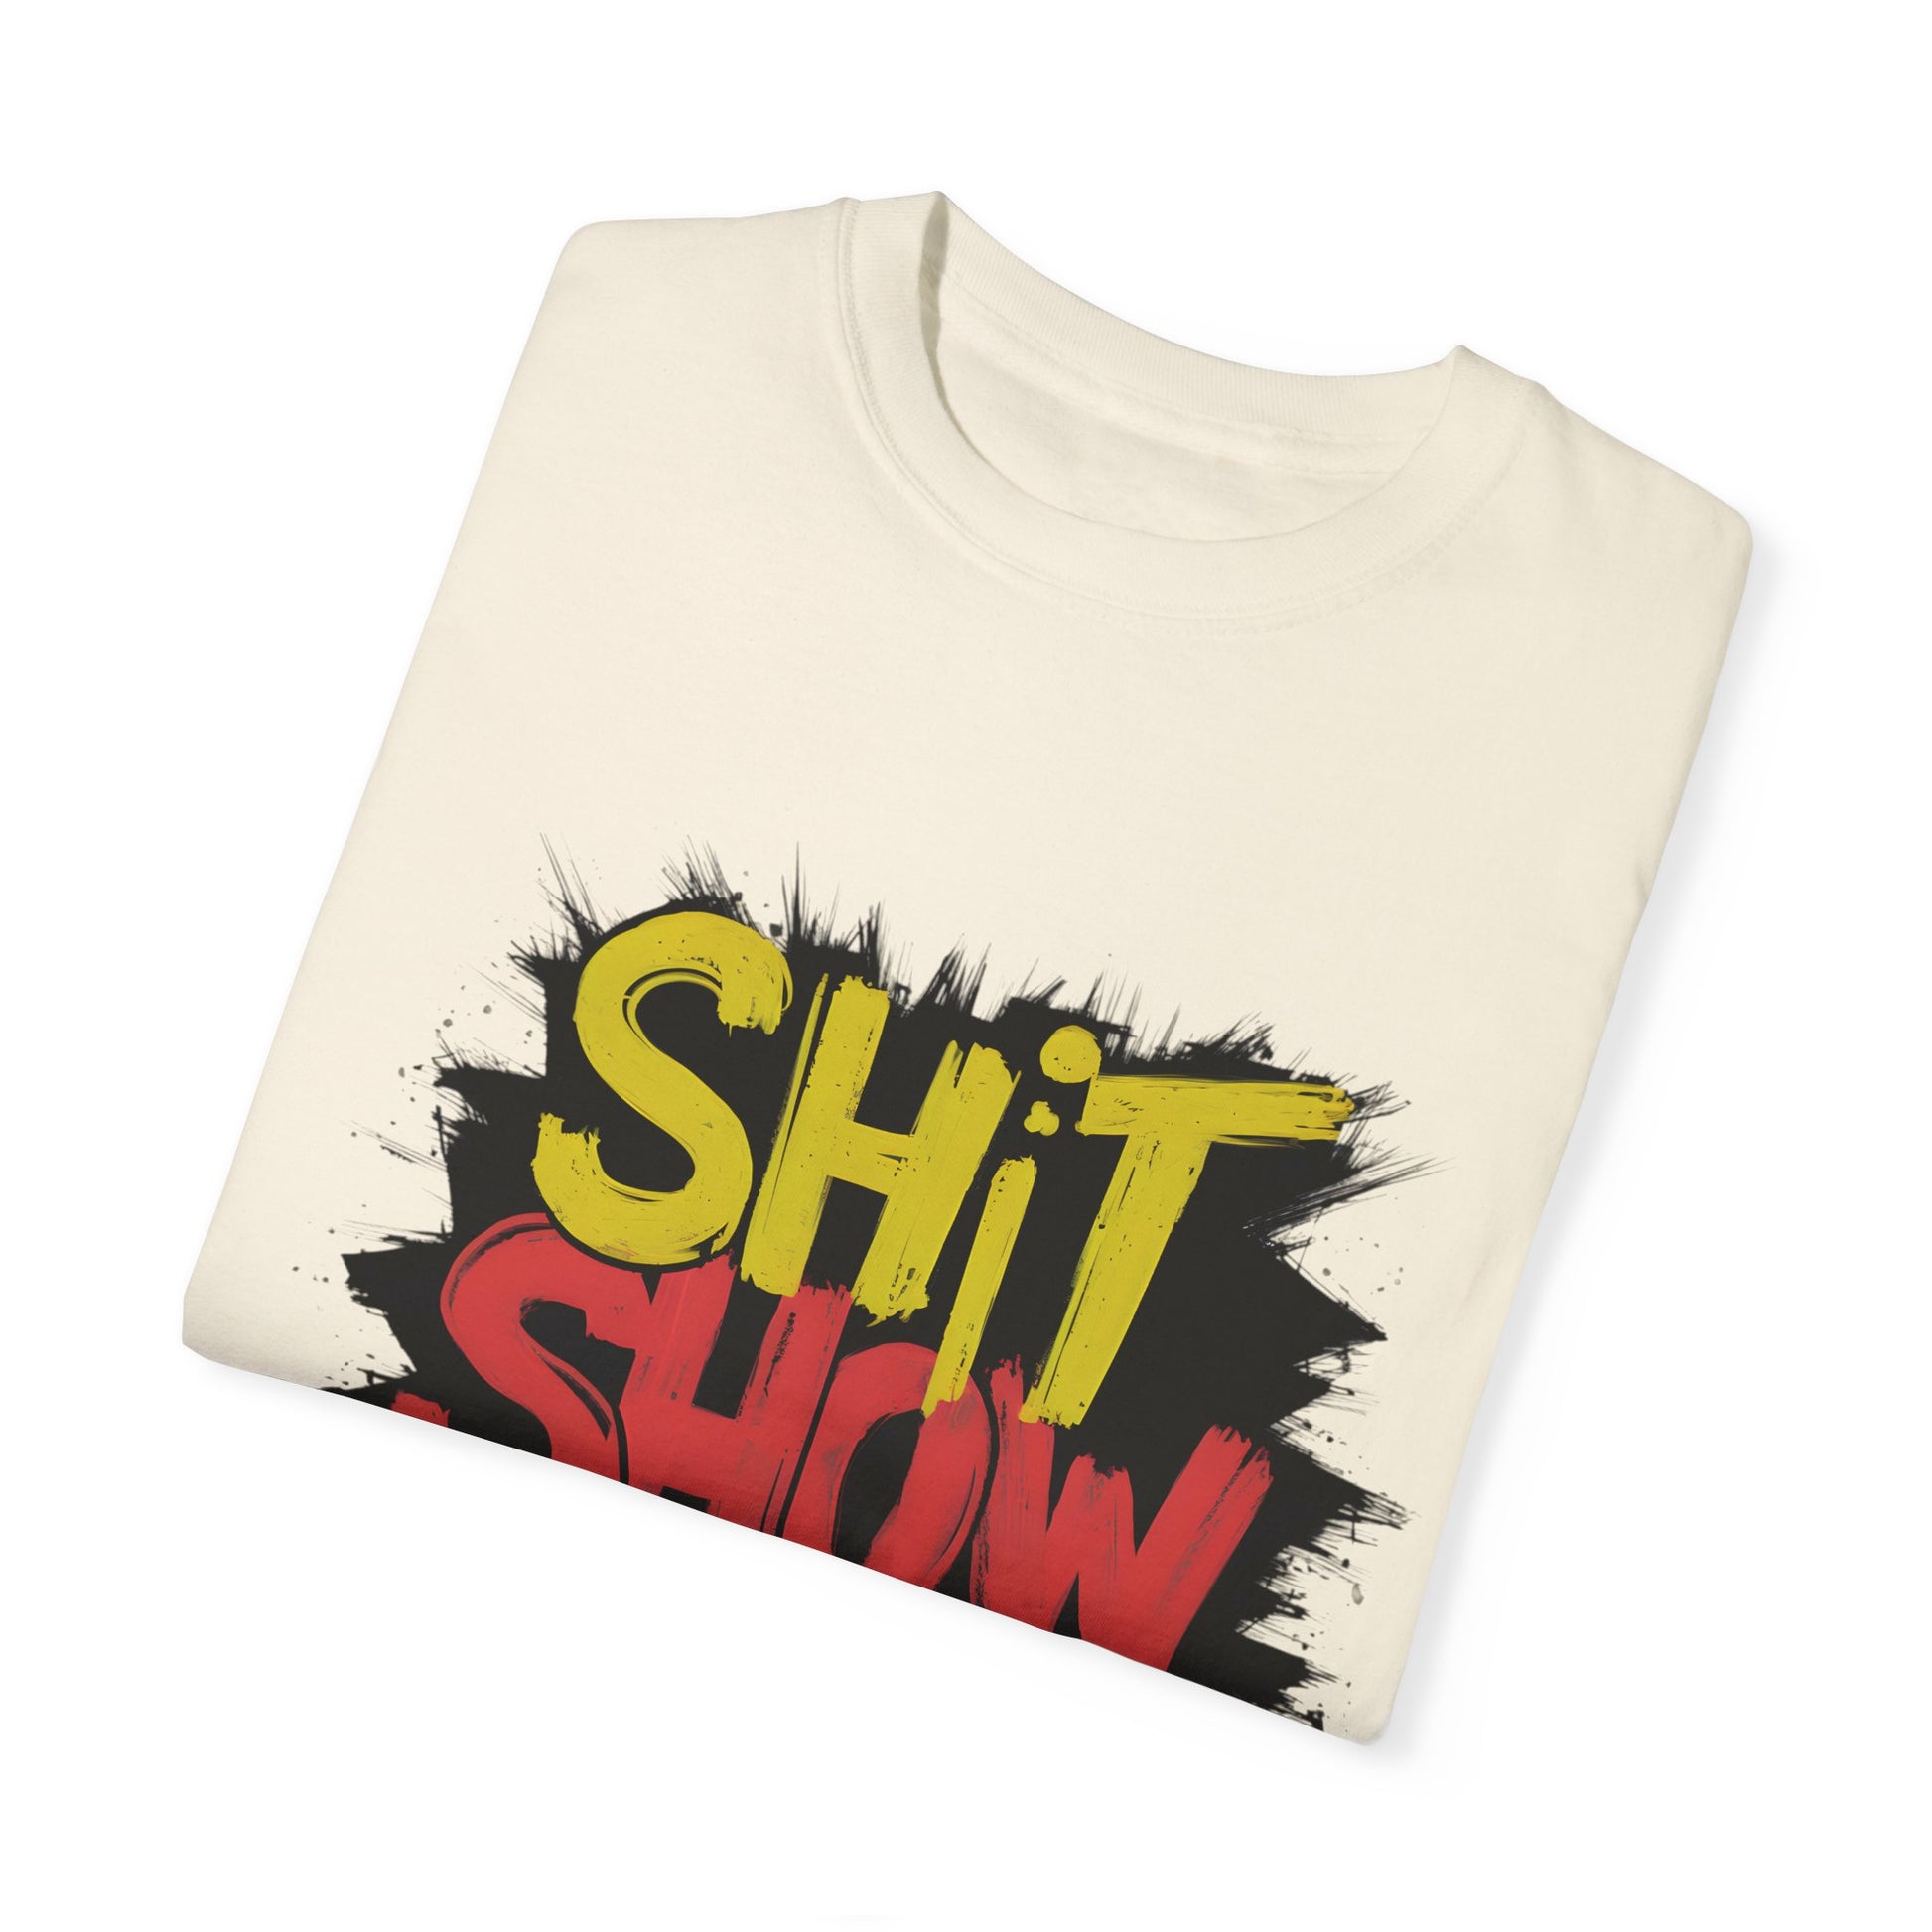 Shit Show Supervisor Urban Sarcastic Graphic Unisex Garment Dyed T-shirt Cotton Funny Humorous Graphic Soft Premium Unisex Men Women Ivory T-shirt Birthday Gift-44